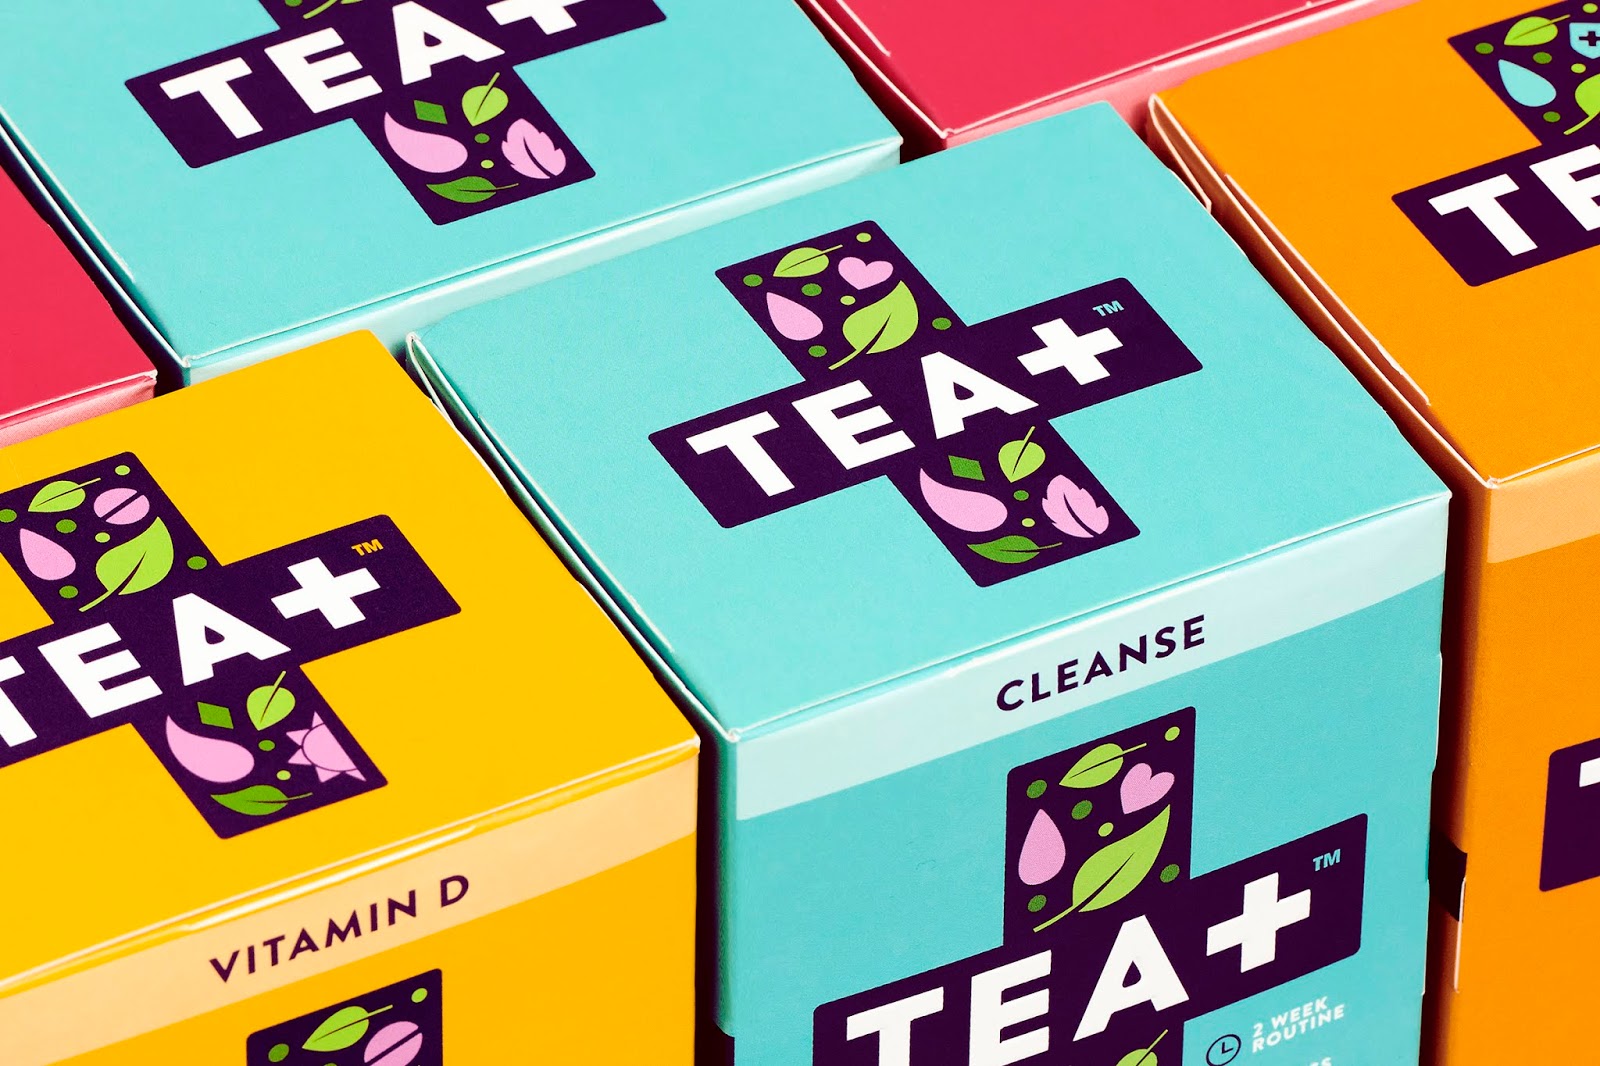 TEA+维它命茶包装设计